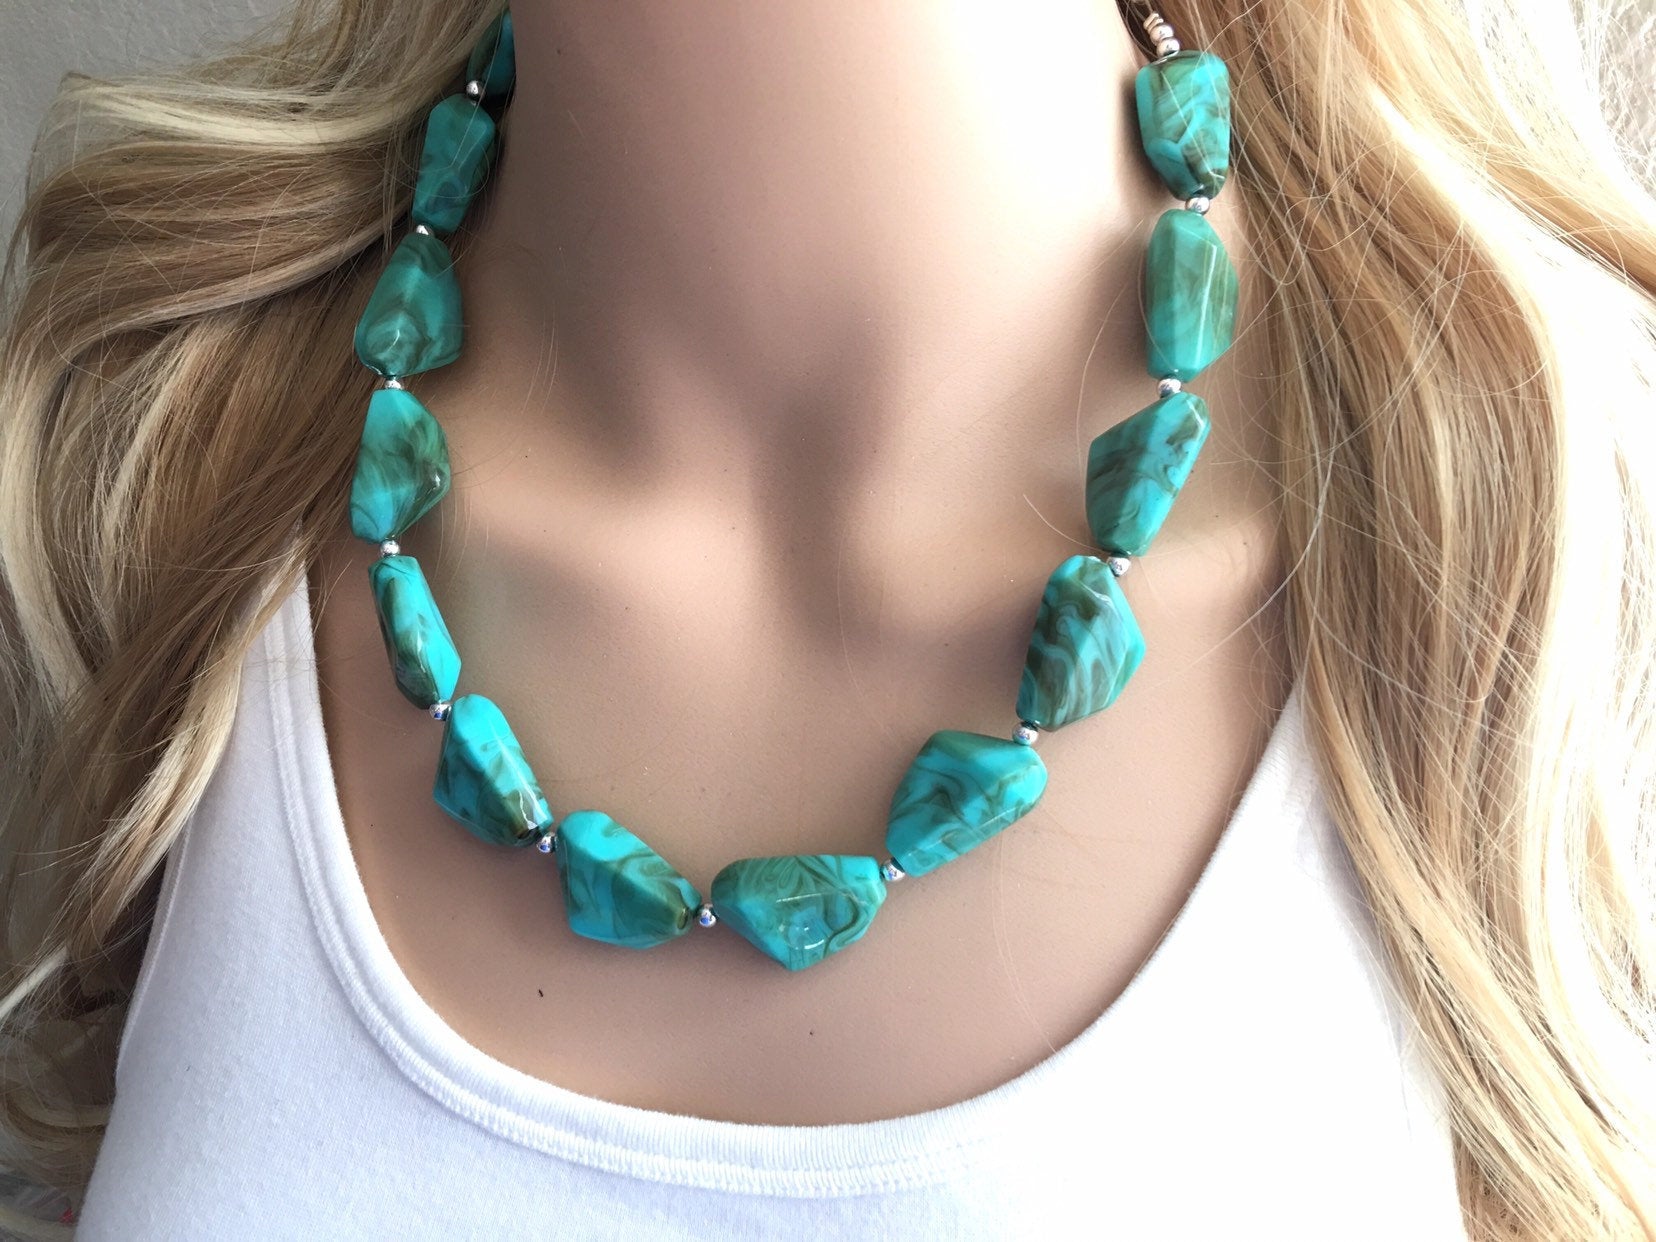 Genuine Large Turquoise Tiger Eye Onyx Stones Necklace Earrings Jewelry Set